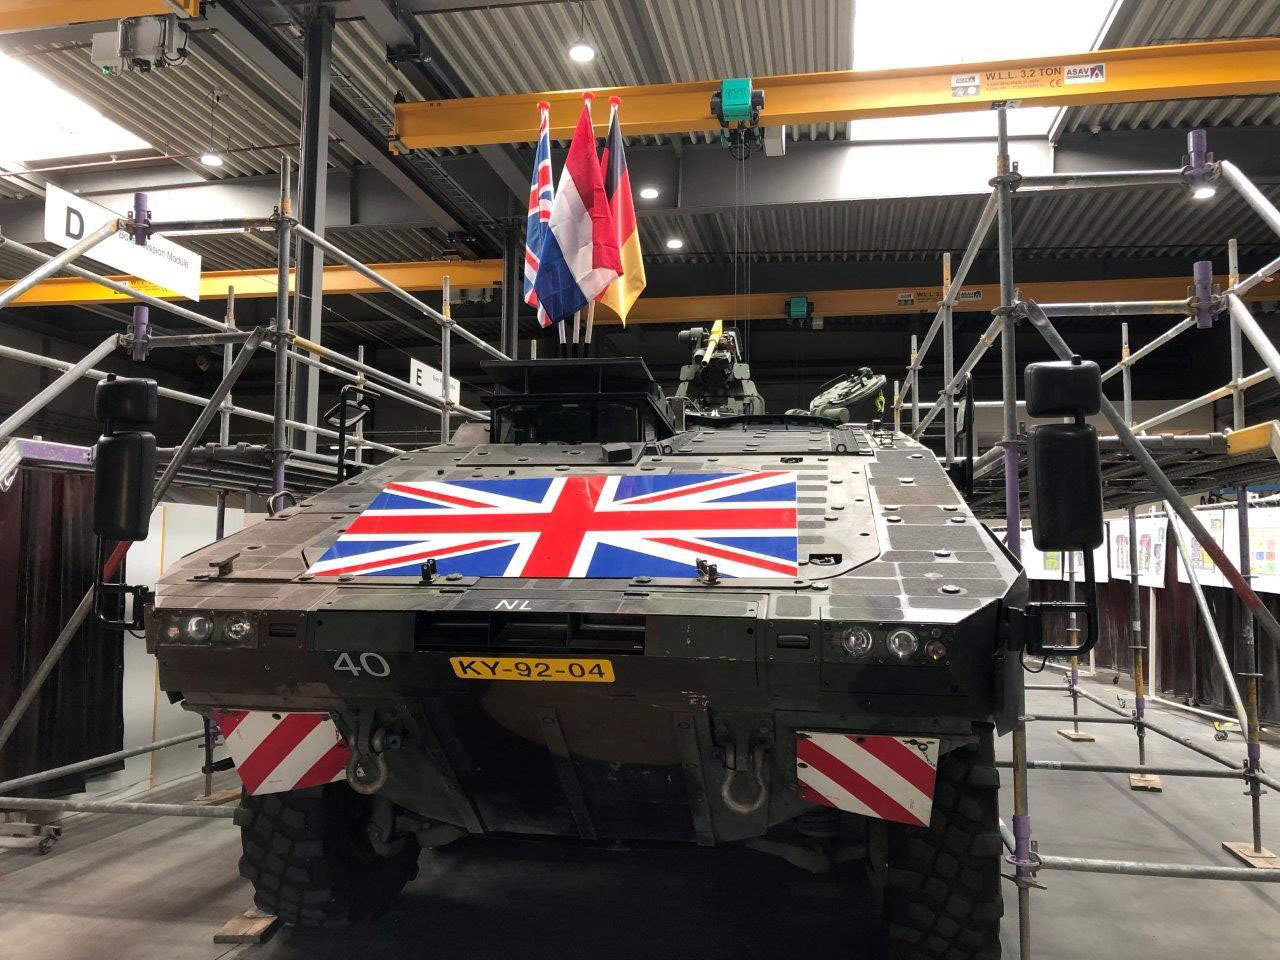 A tank-like armoured vehicle draped in a Union Jack flag